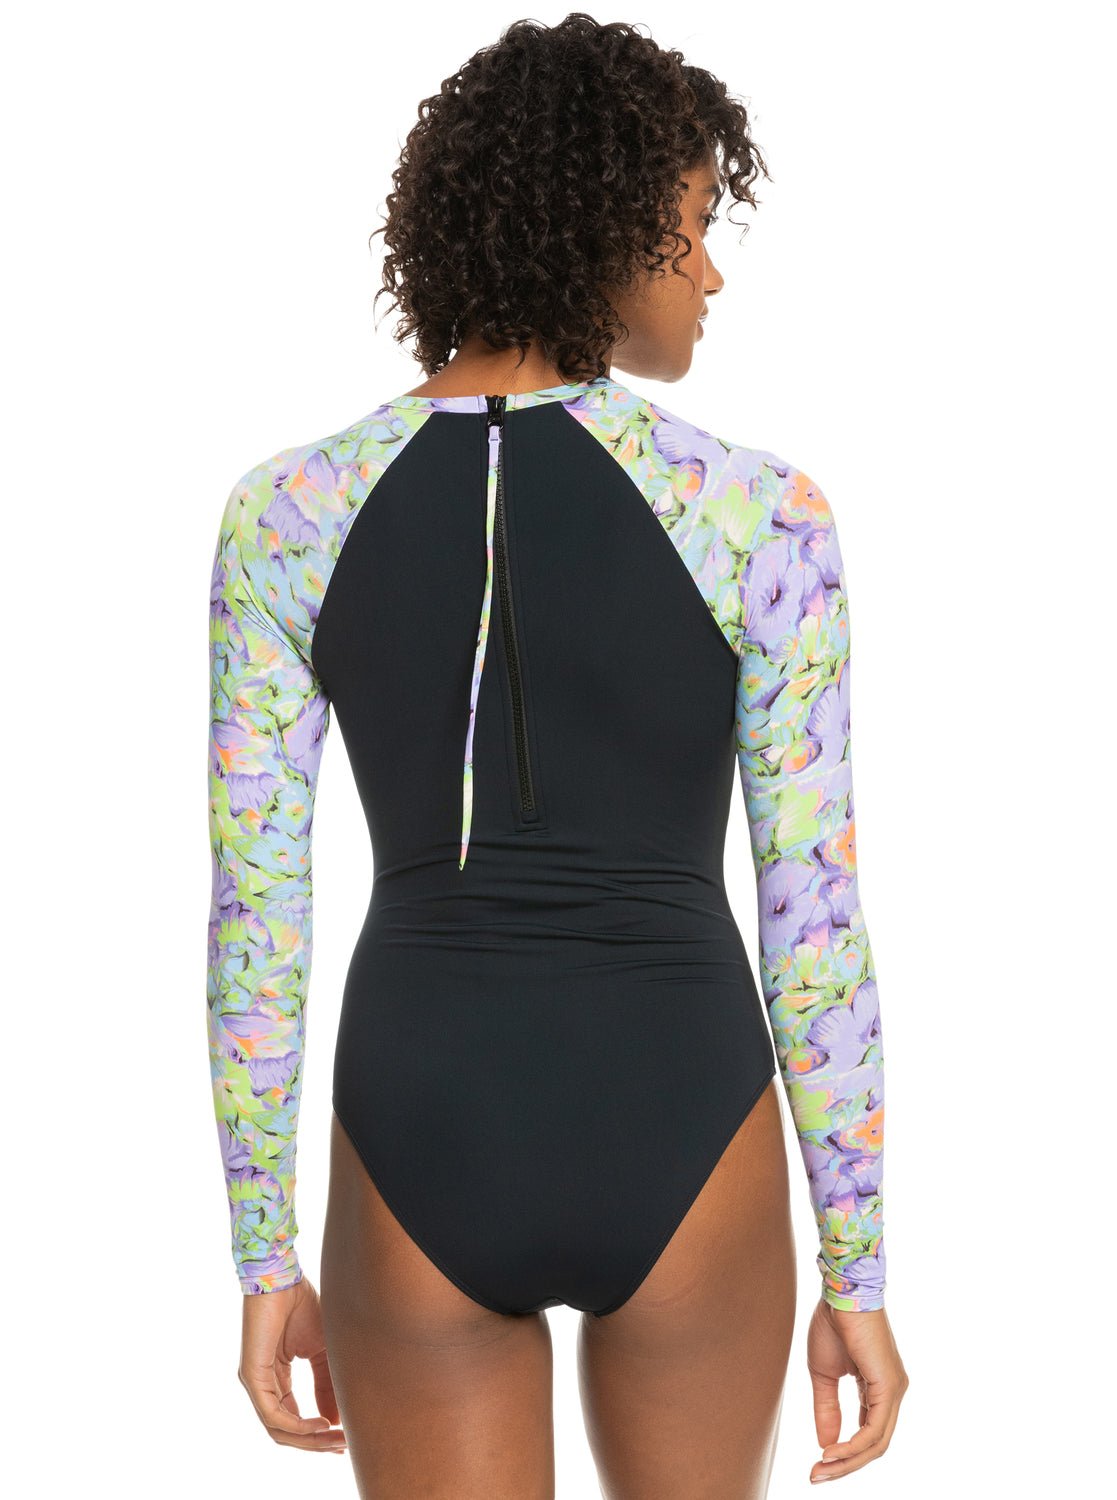 Onesie - Long Sleeve One-Piece Swimsuit for Women